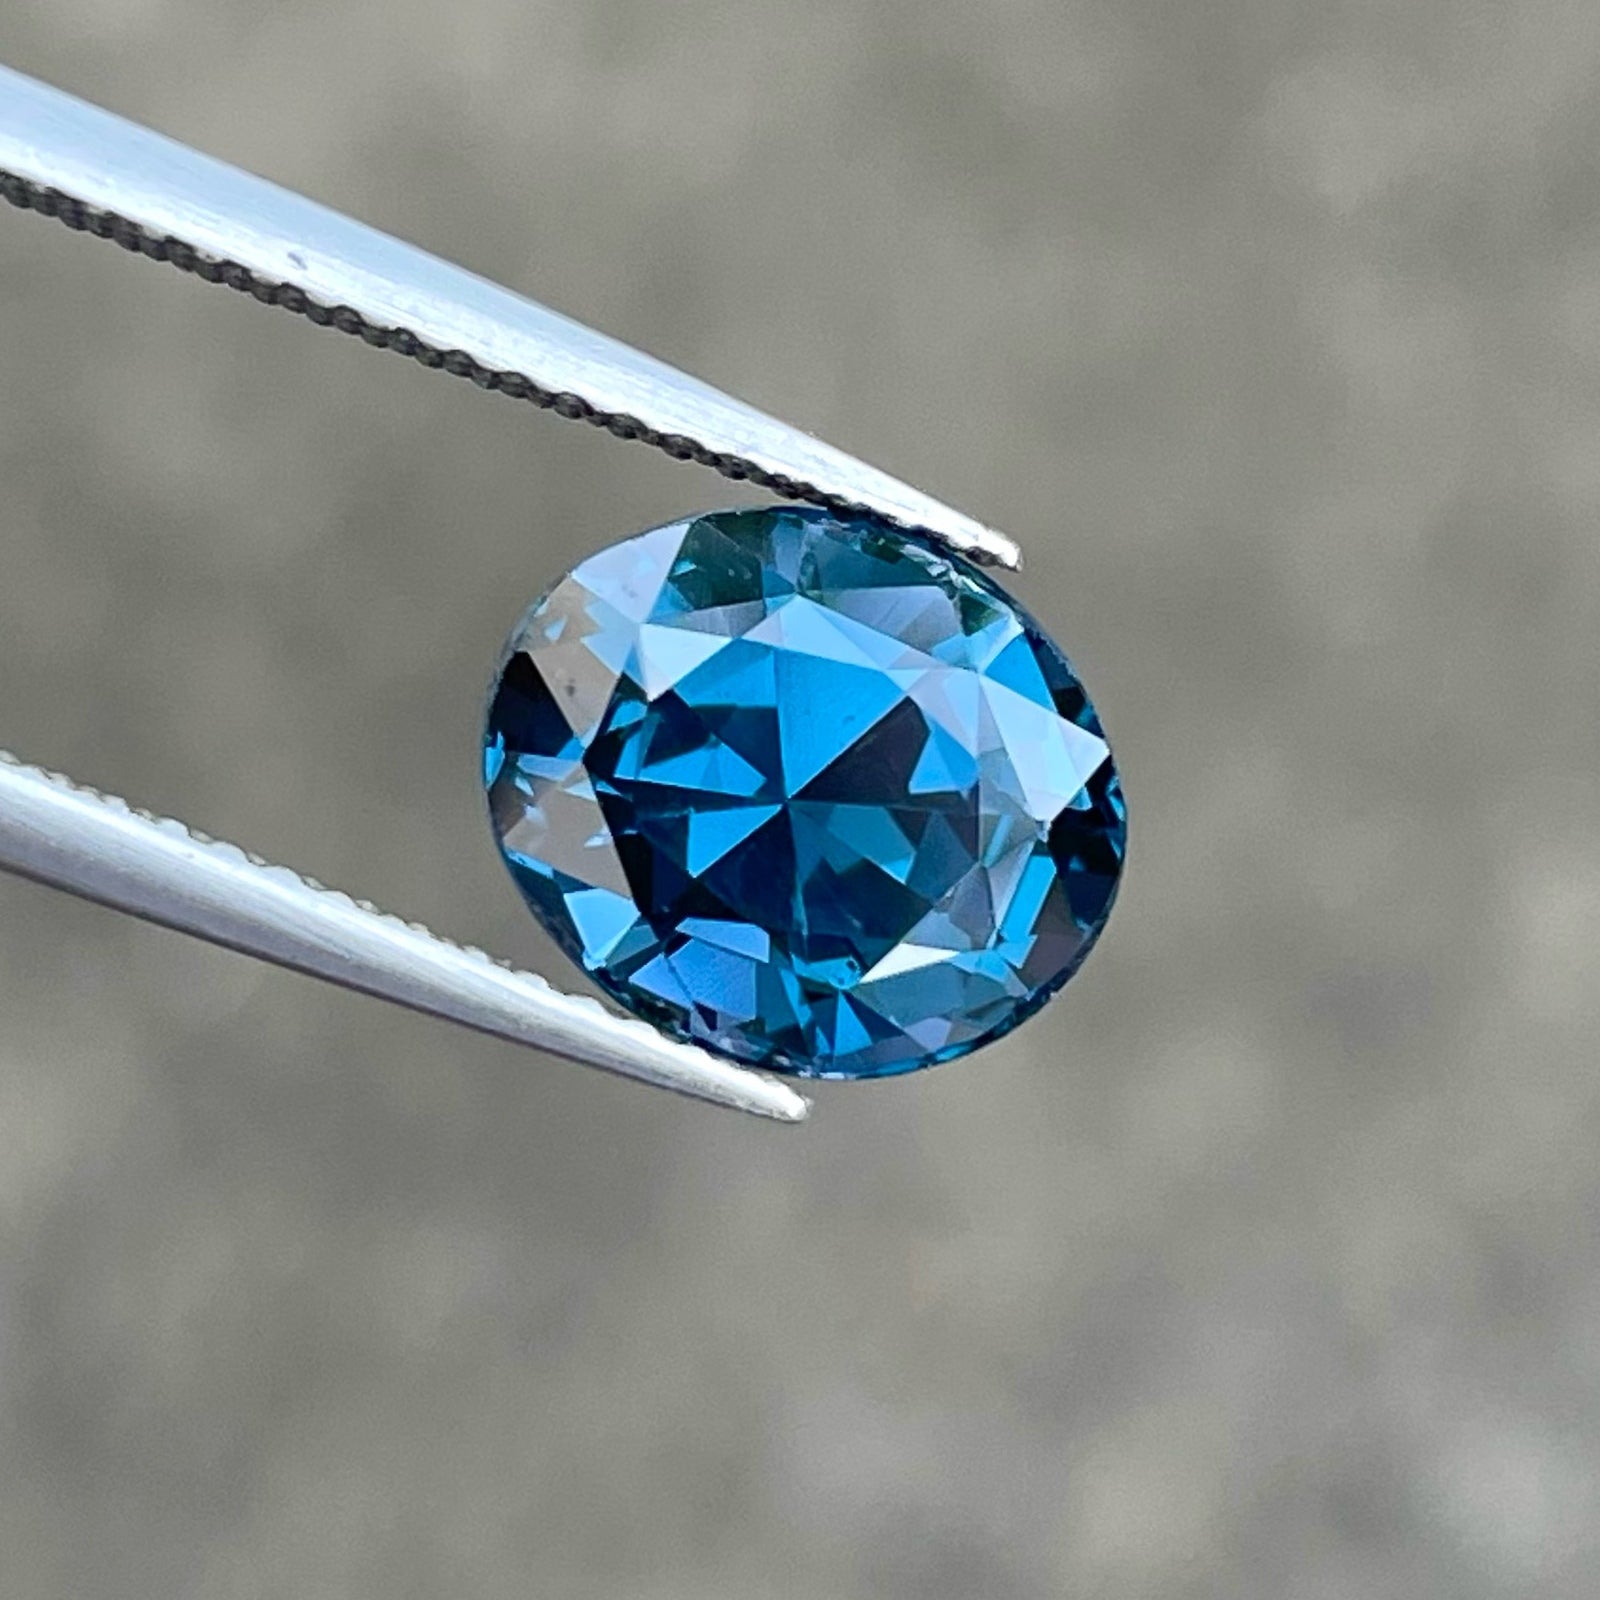 Outstanding Deep Blue Spinel Gemstone